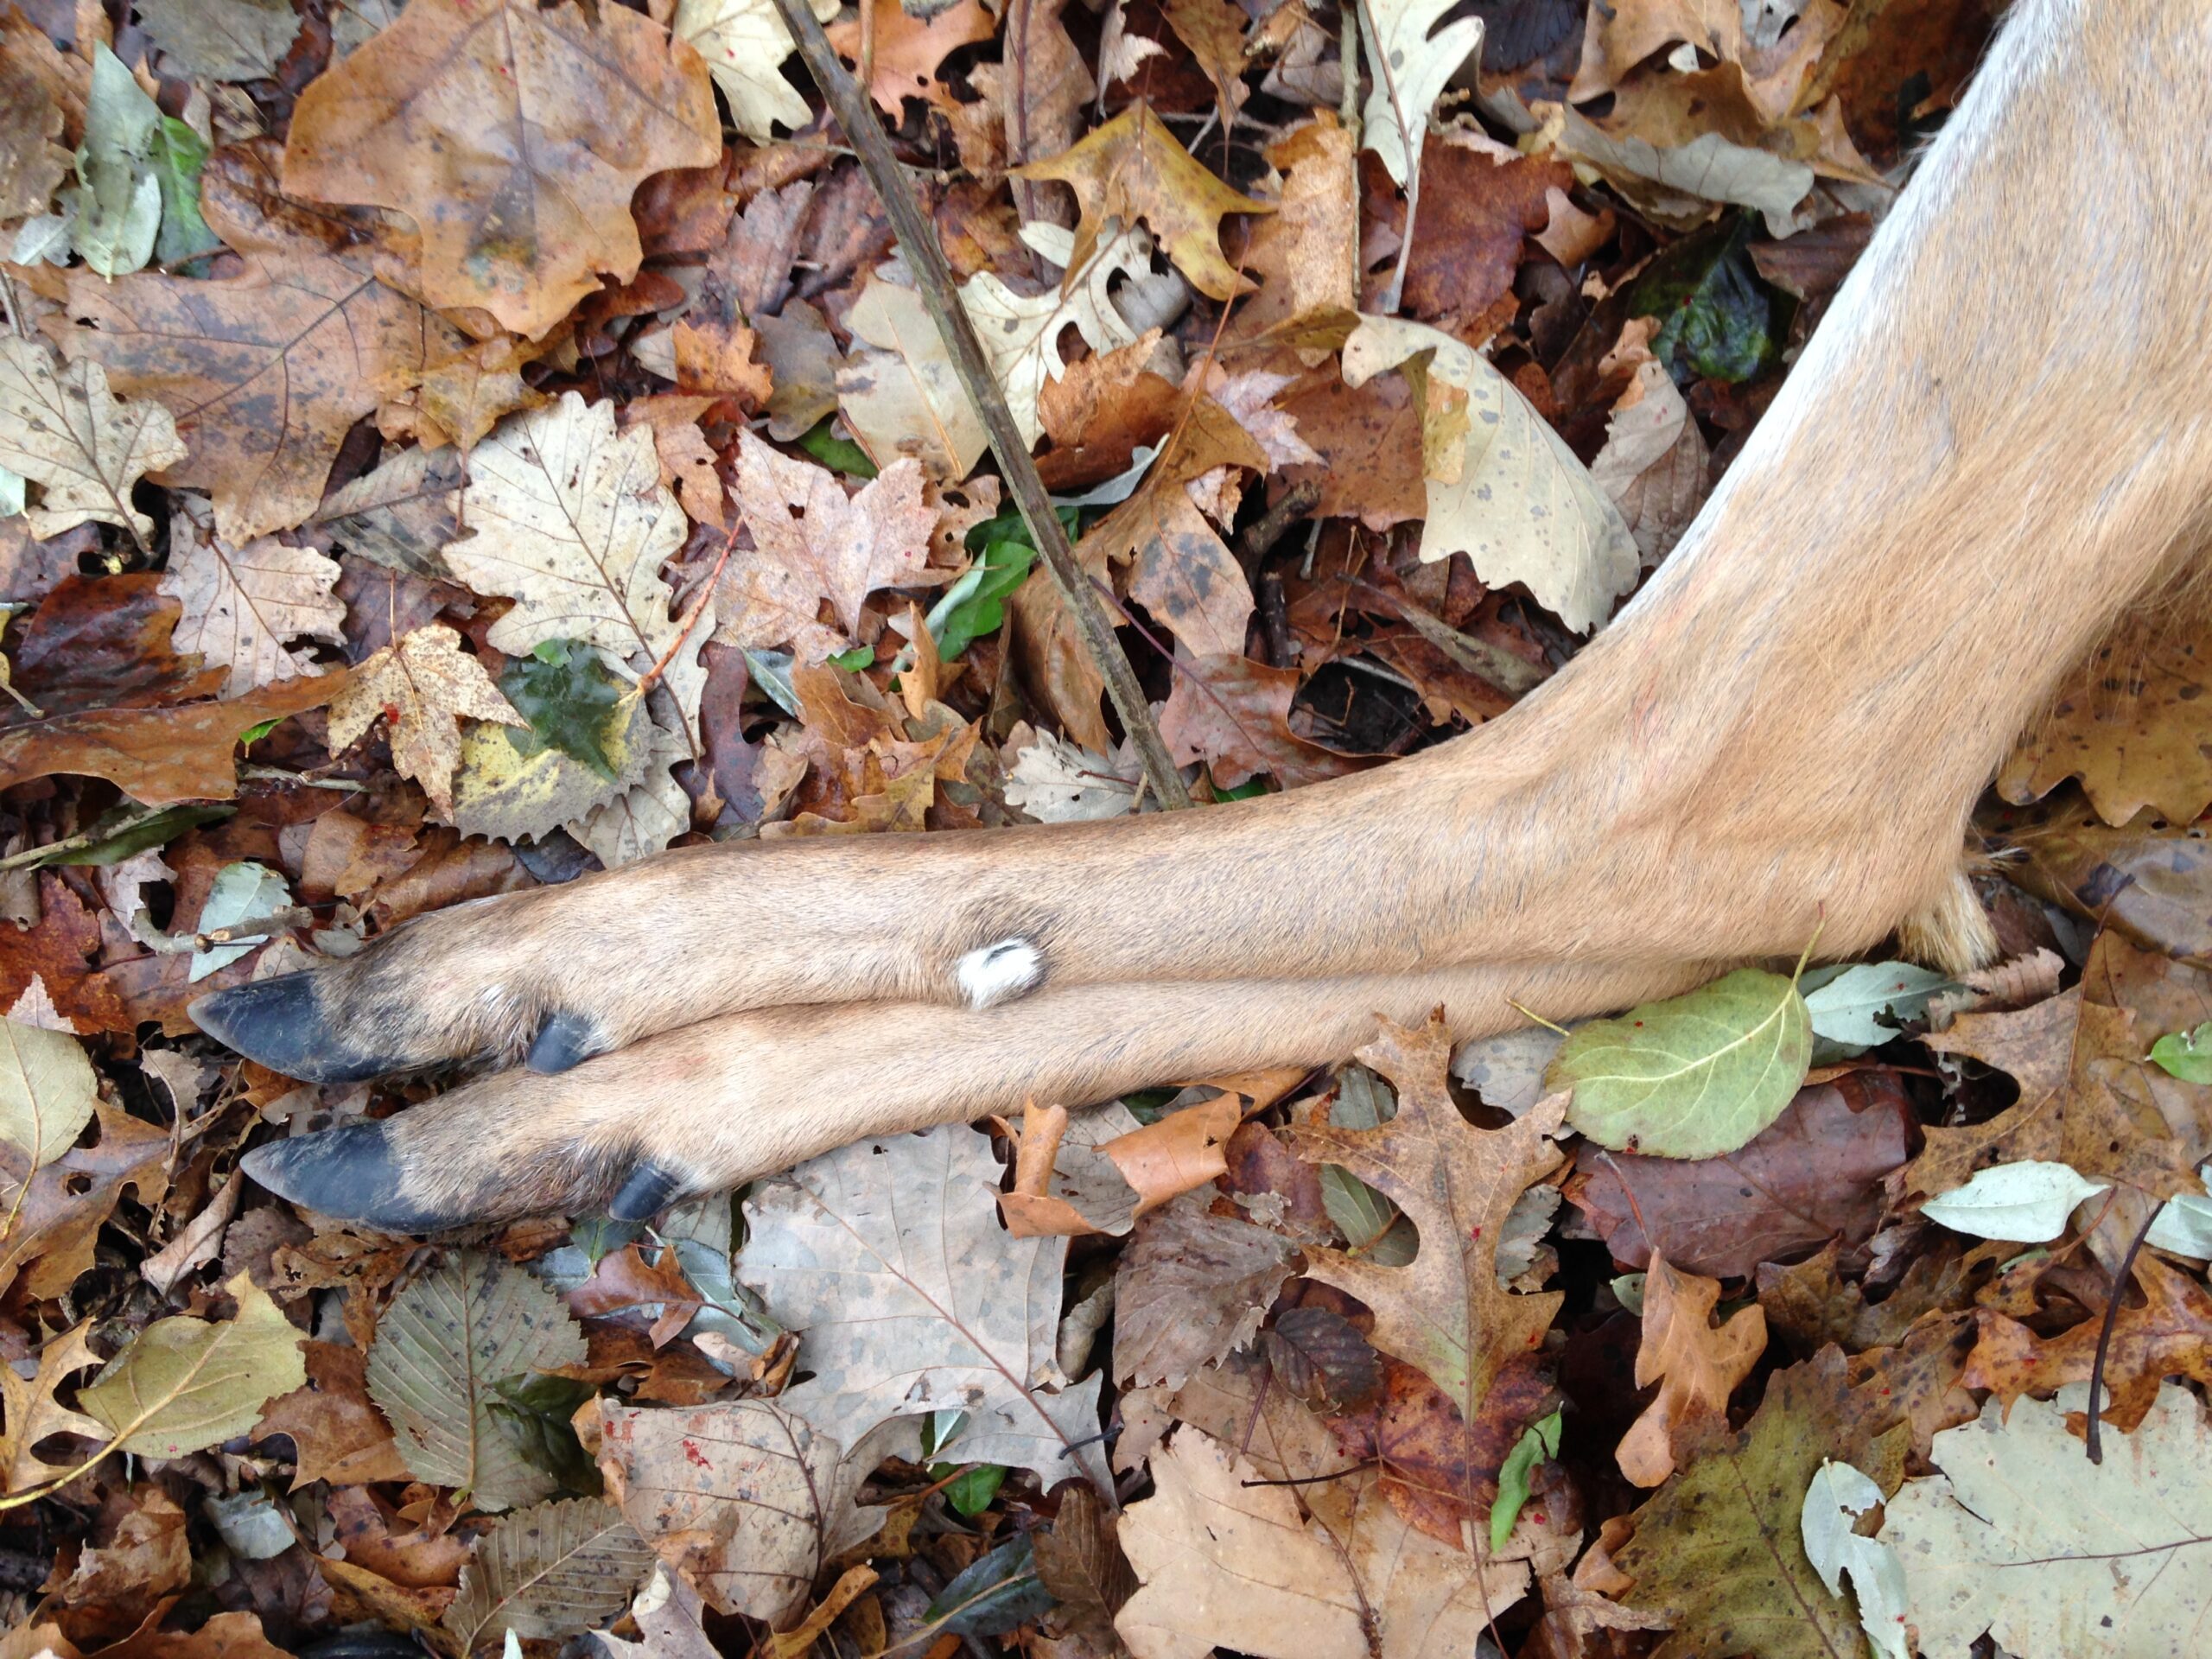 The legs of a dead deer